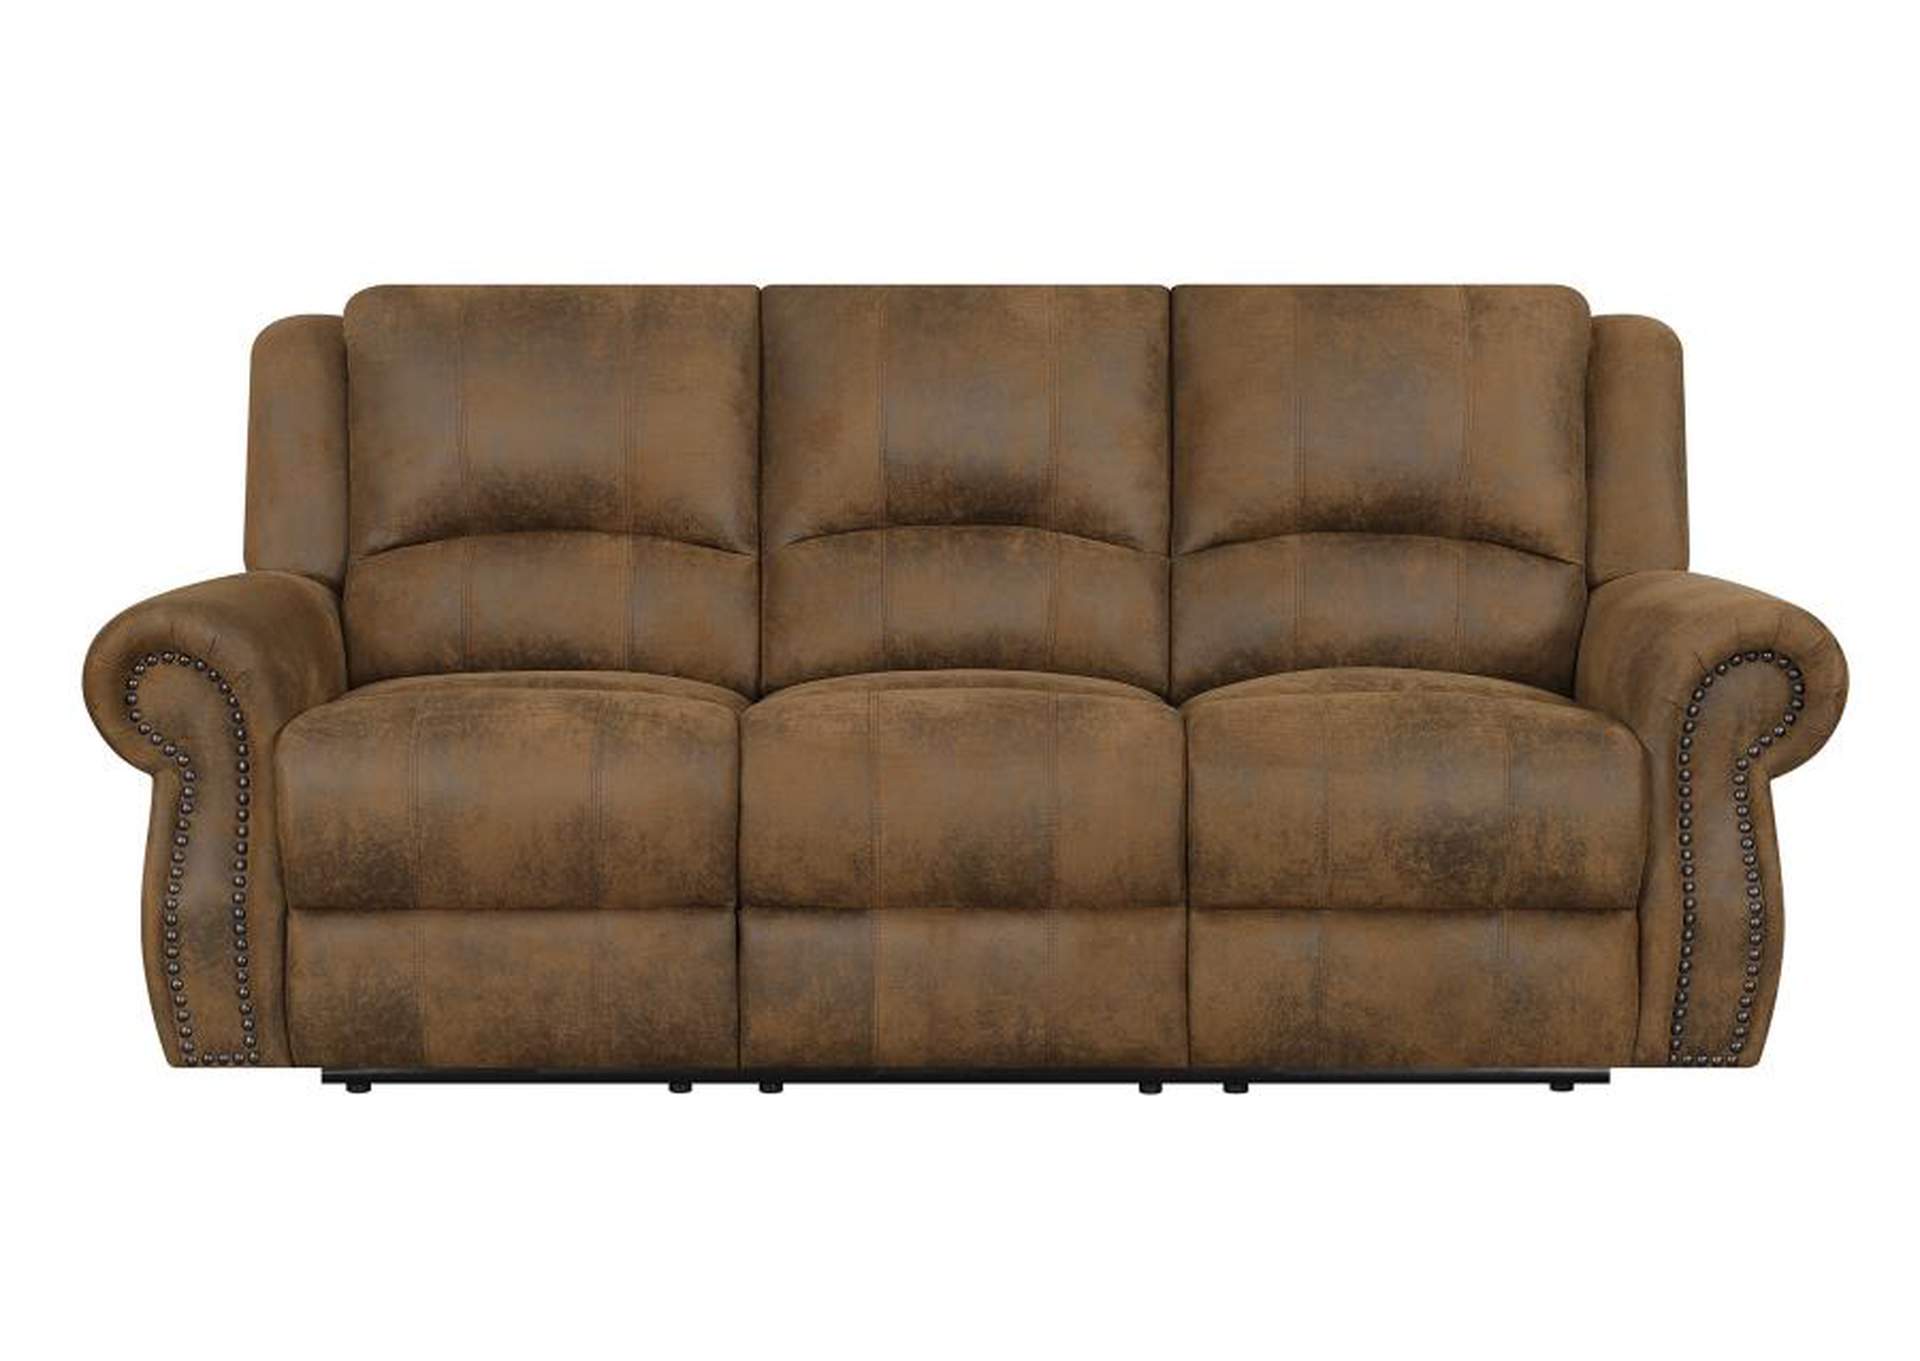 Sir Rawlinson Rolled Arm Motion Sofa With Nailhead Trim Buckskin Brown,Coaster Furniture